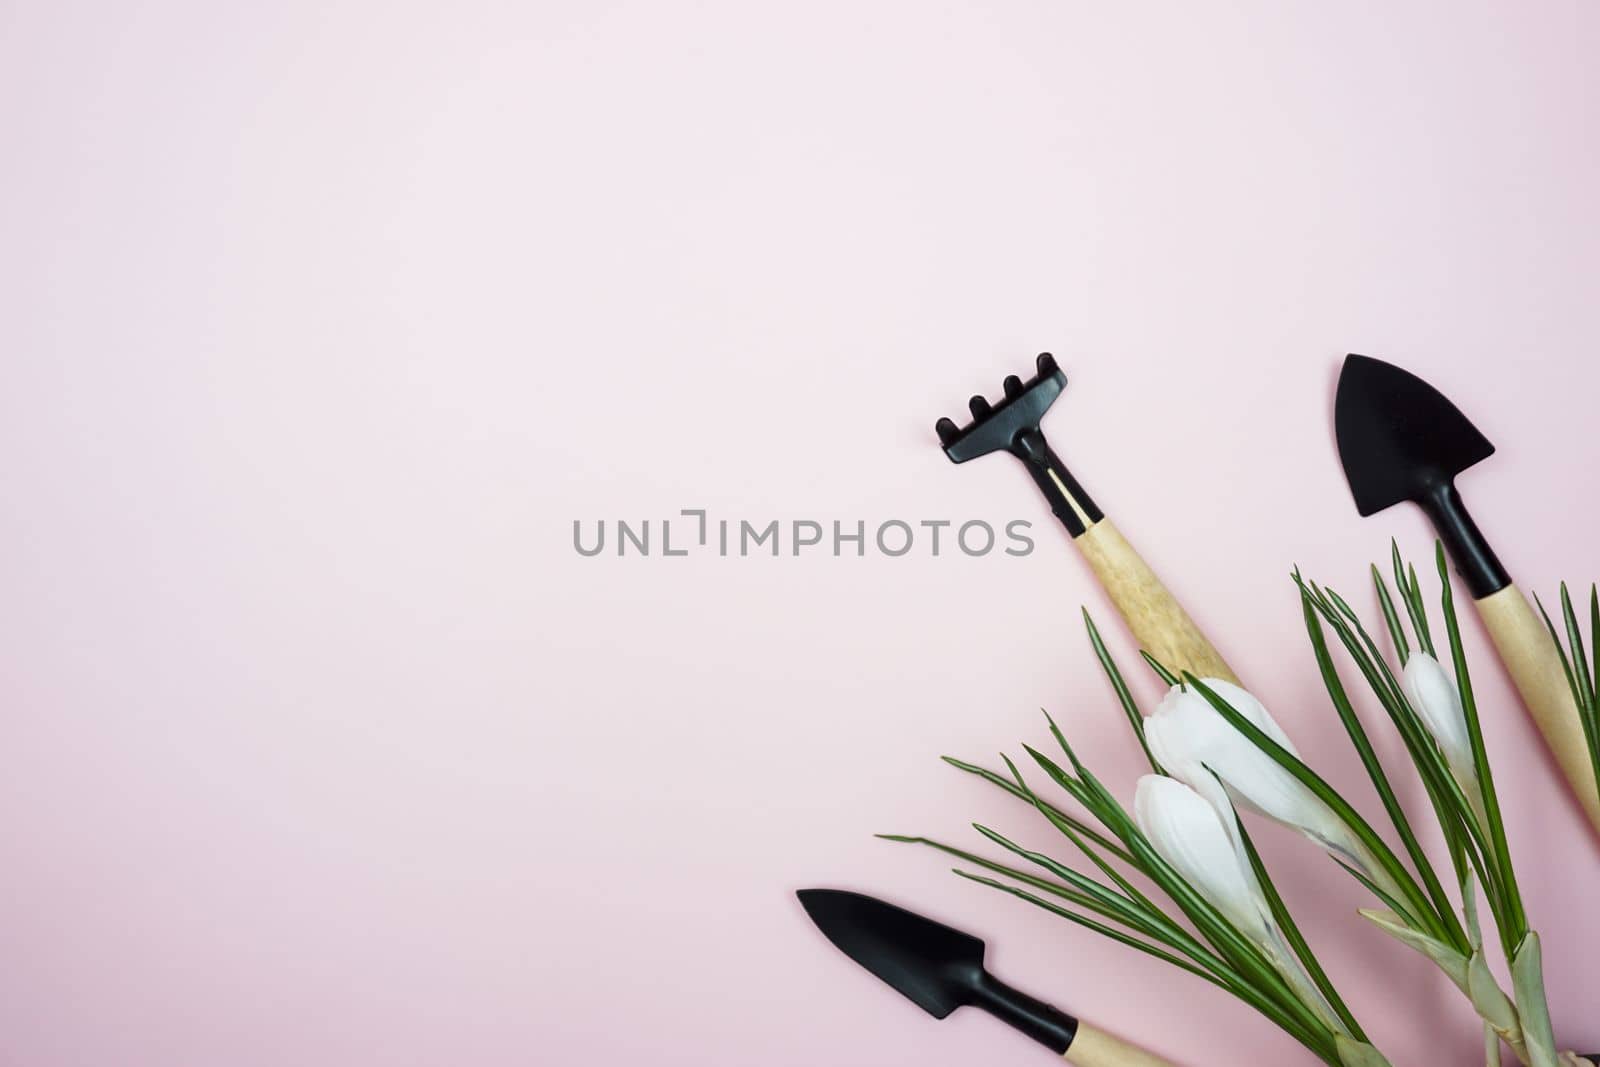 Gardening tools and a crocus flower lie on a pink background by Spirina